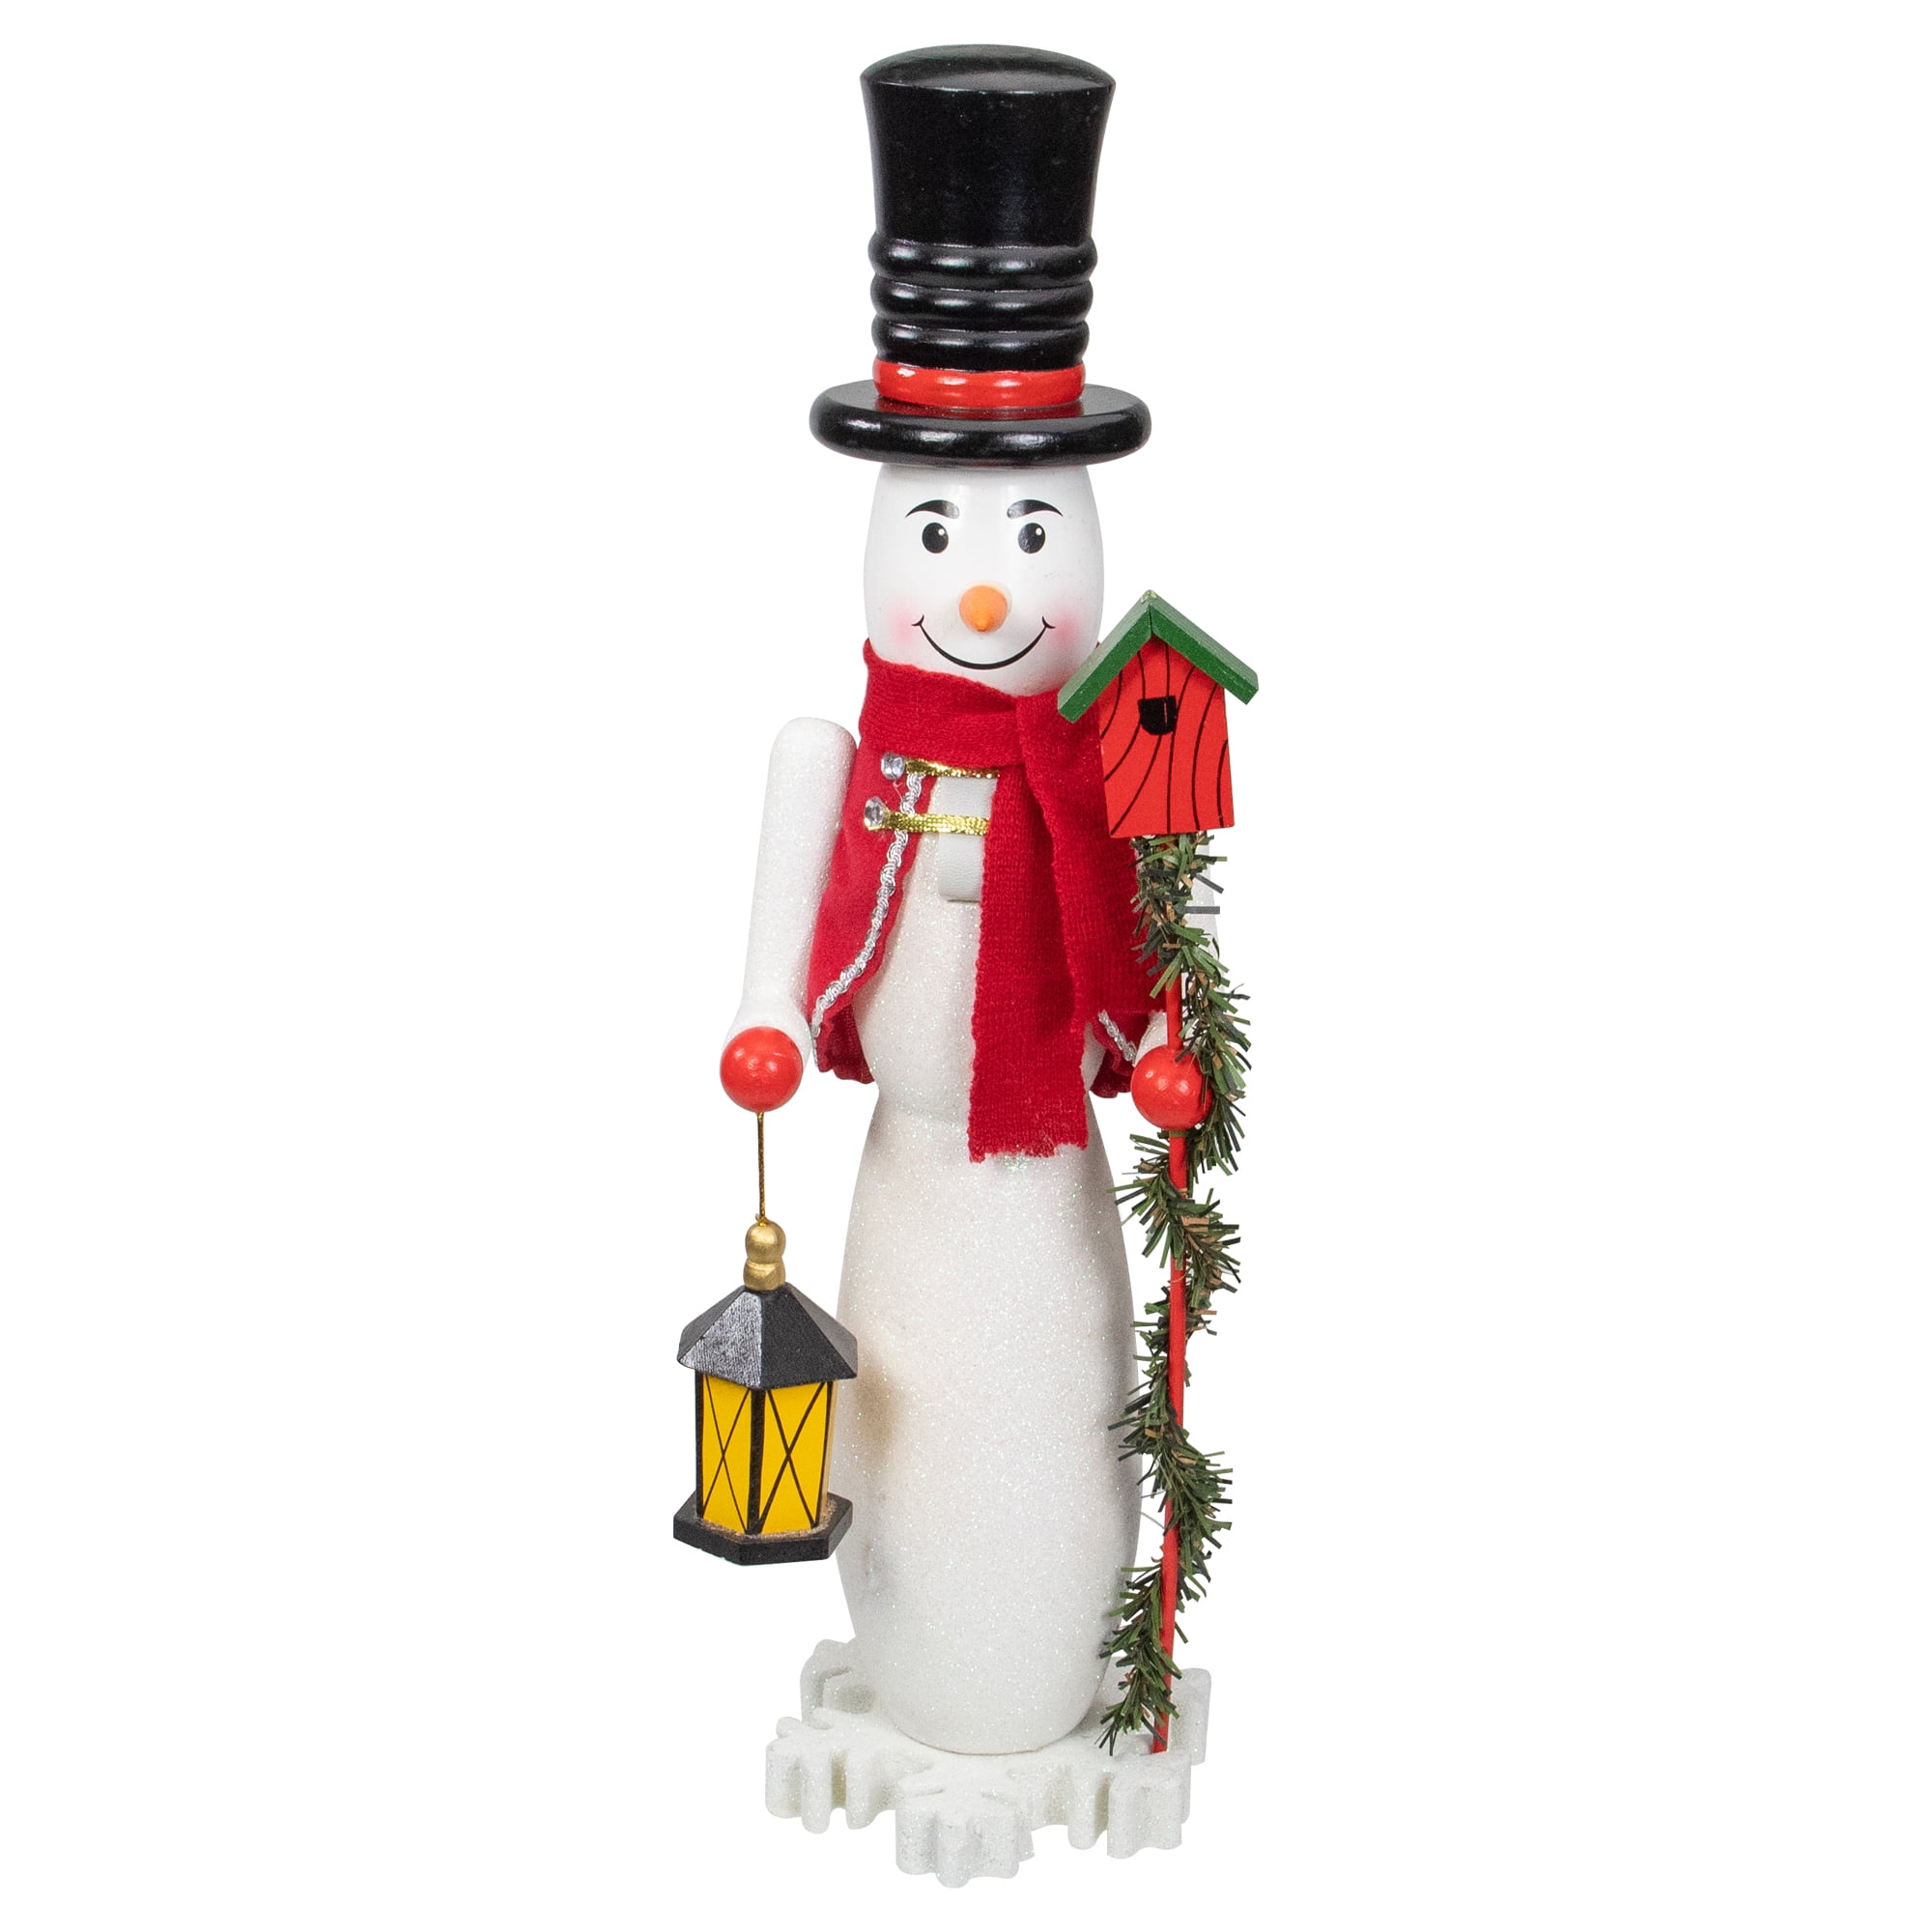 Snowman Wooden Nutcracker Doll 10" Tall NEW